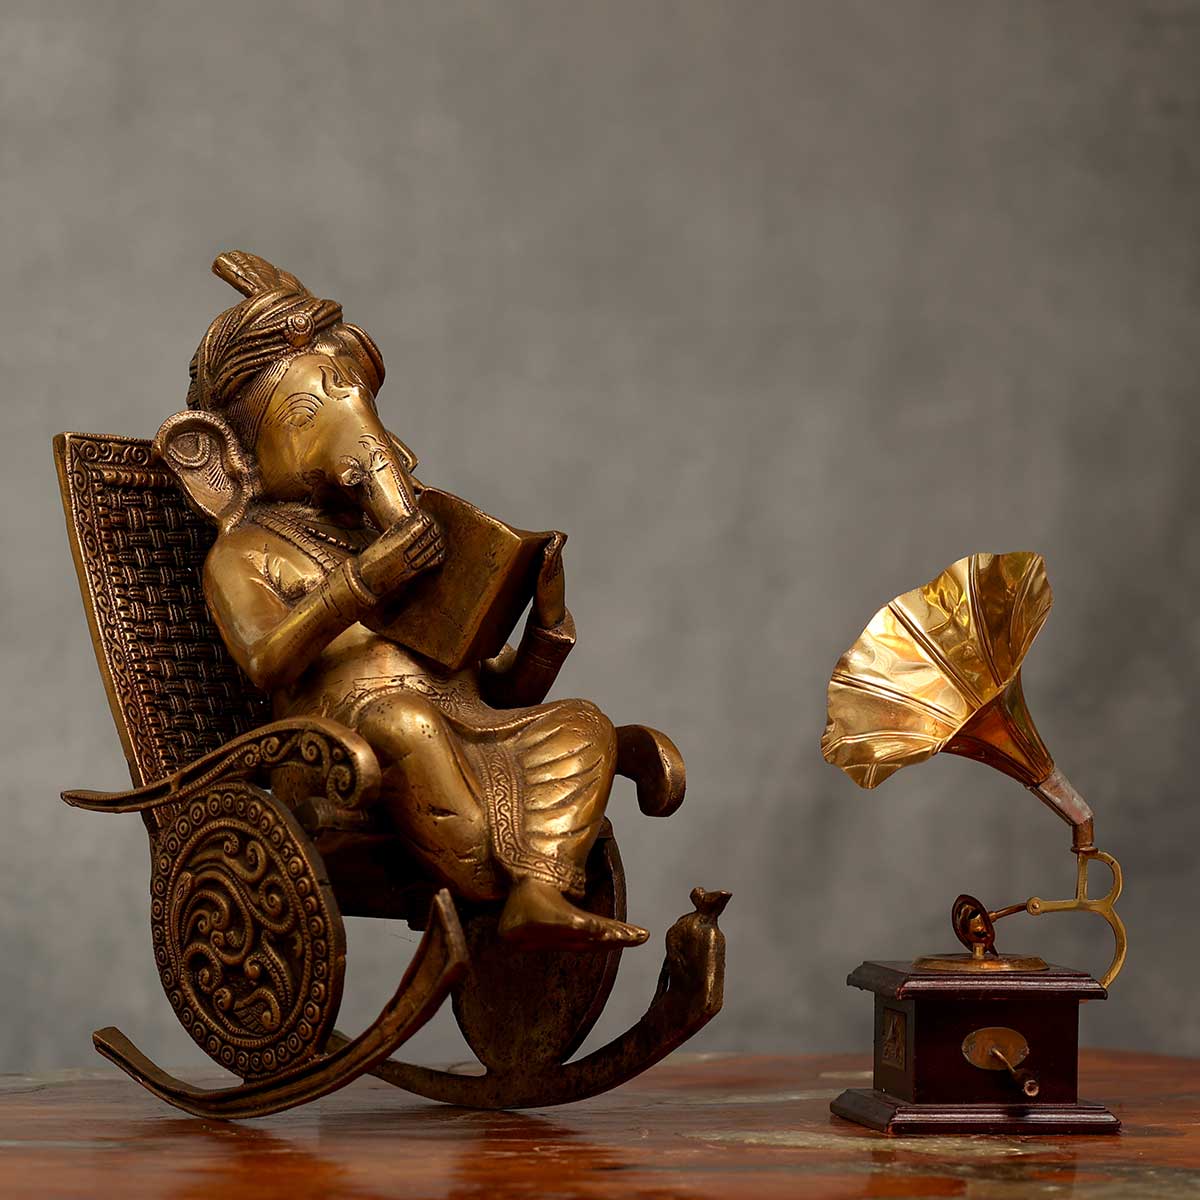 Lord Ganesha reading Idol made of Pure Brass - 7.5 x 13 x 15.5 Inch, 11.5 Kg